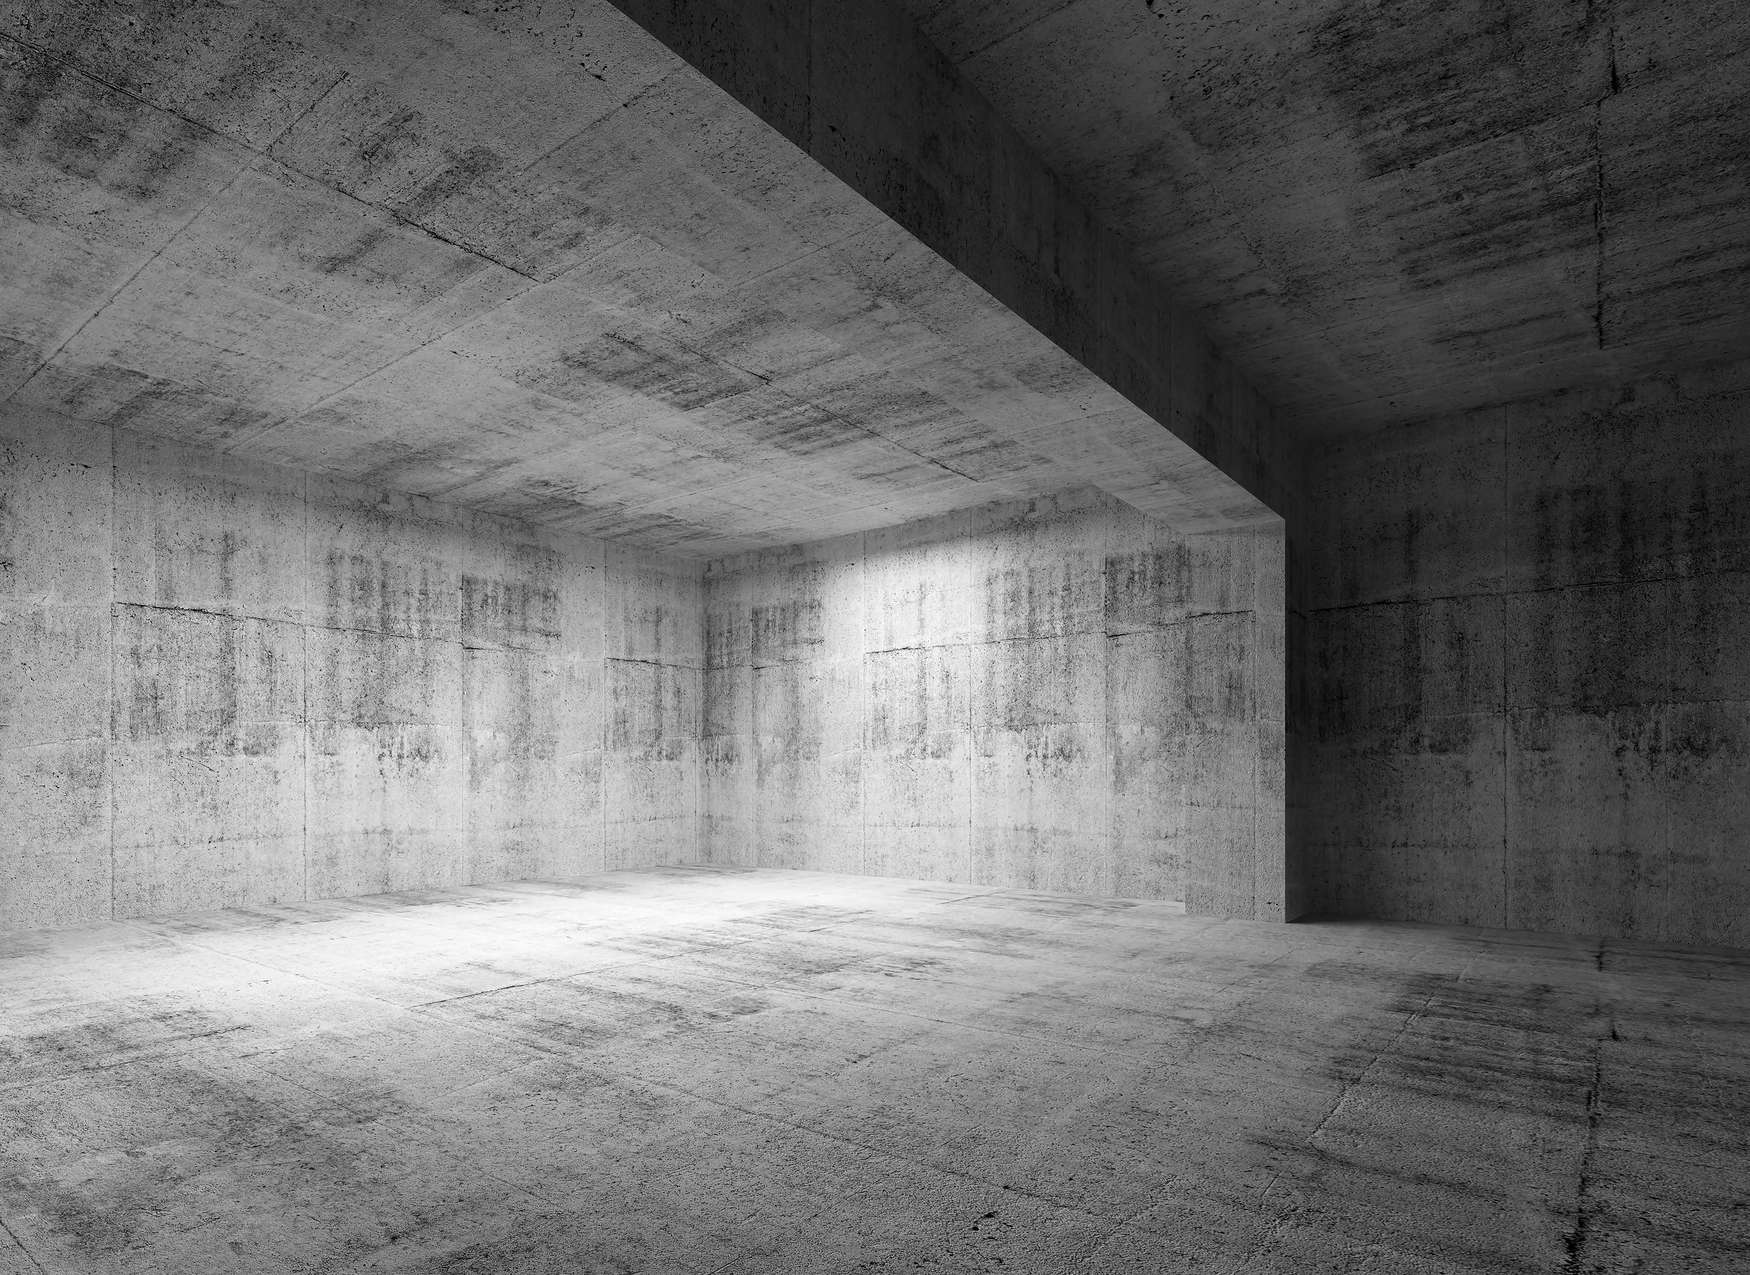             Fototapete Beton-Raum mit 3D-Wirkung – Grau
        